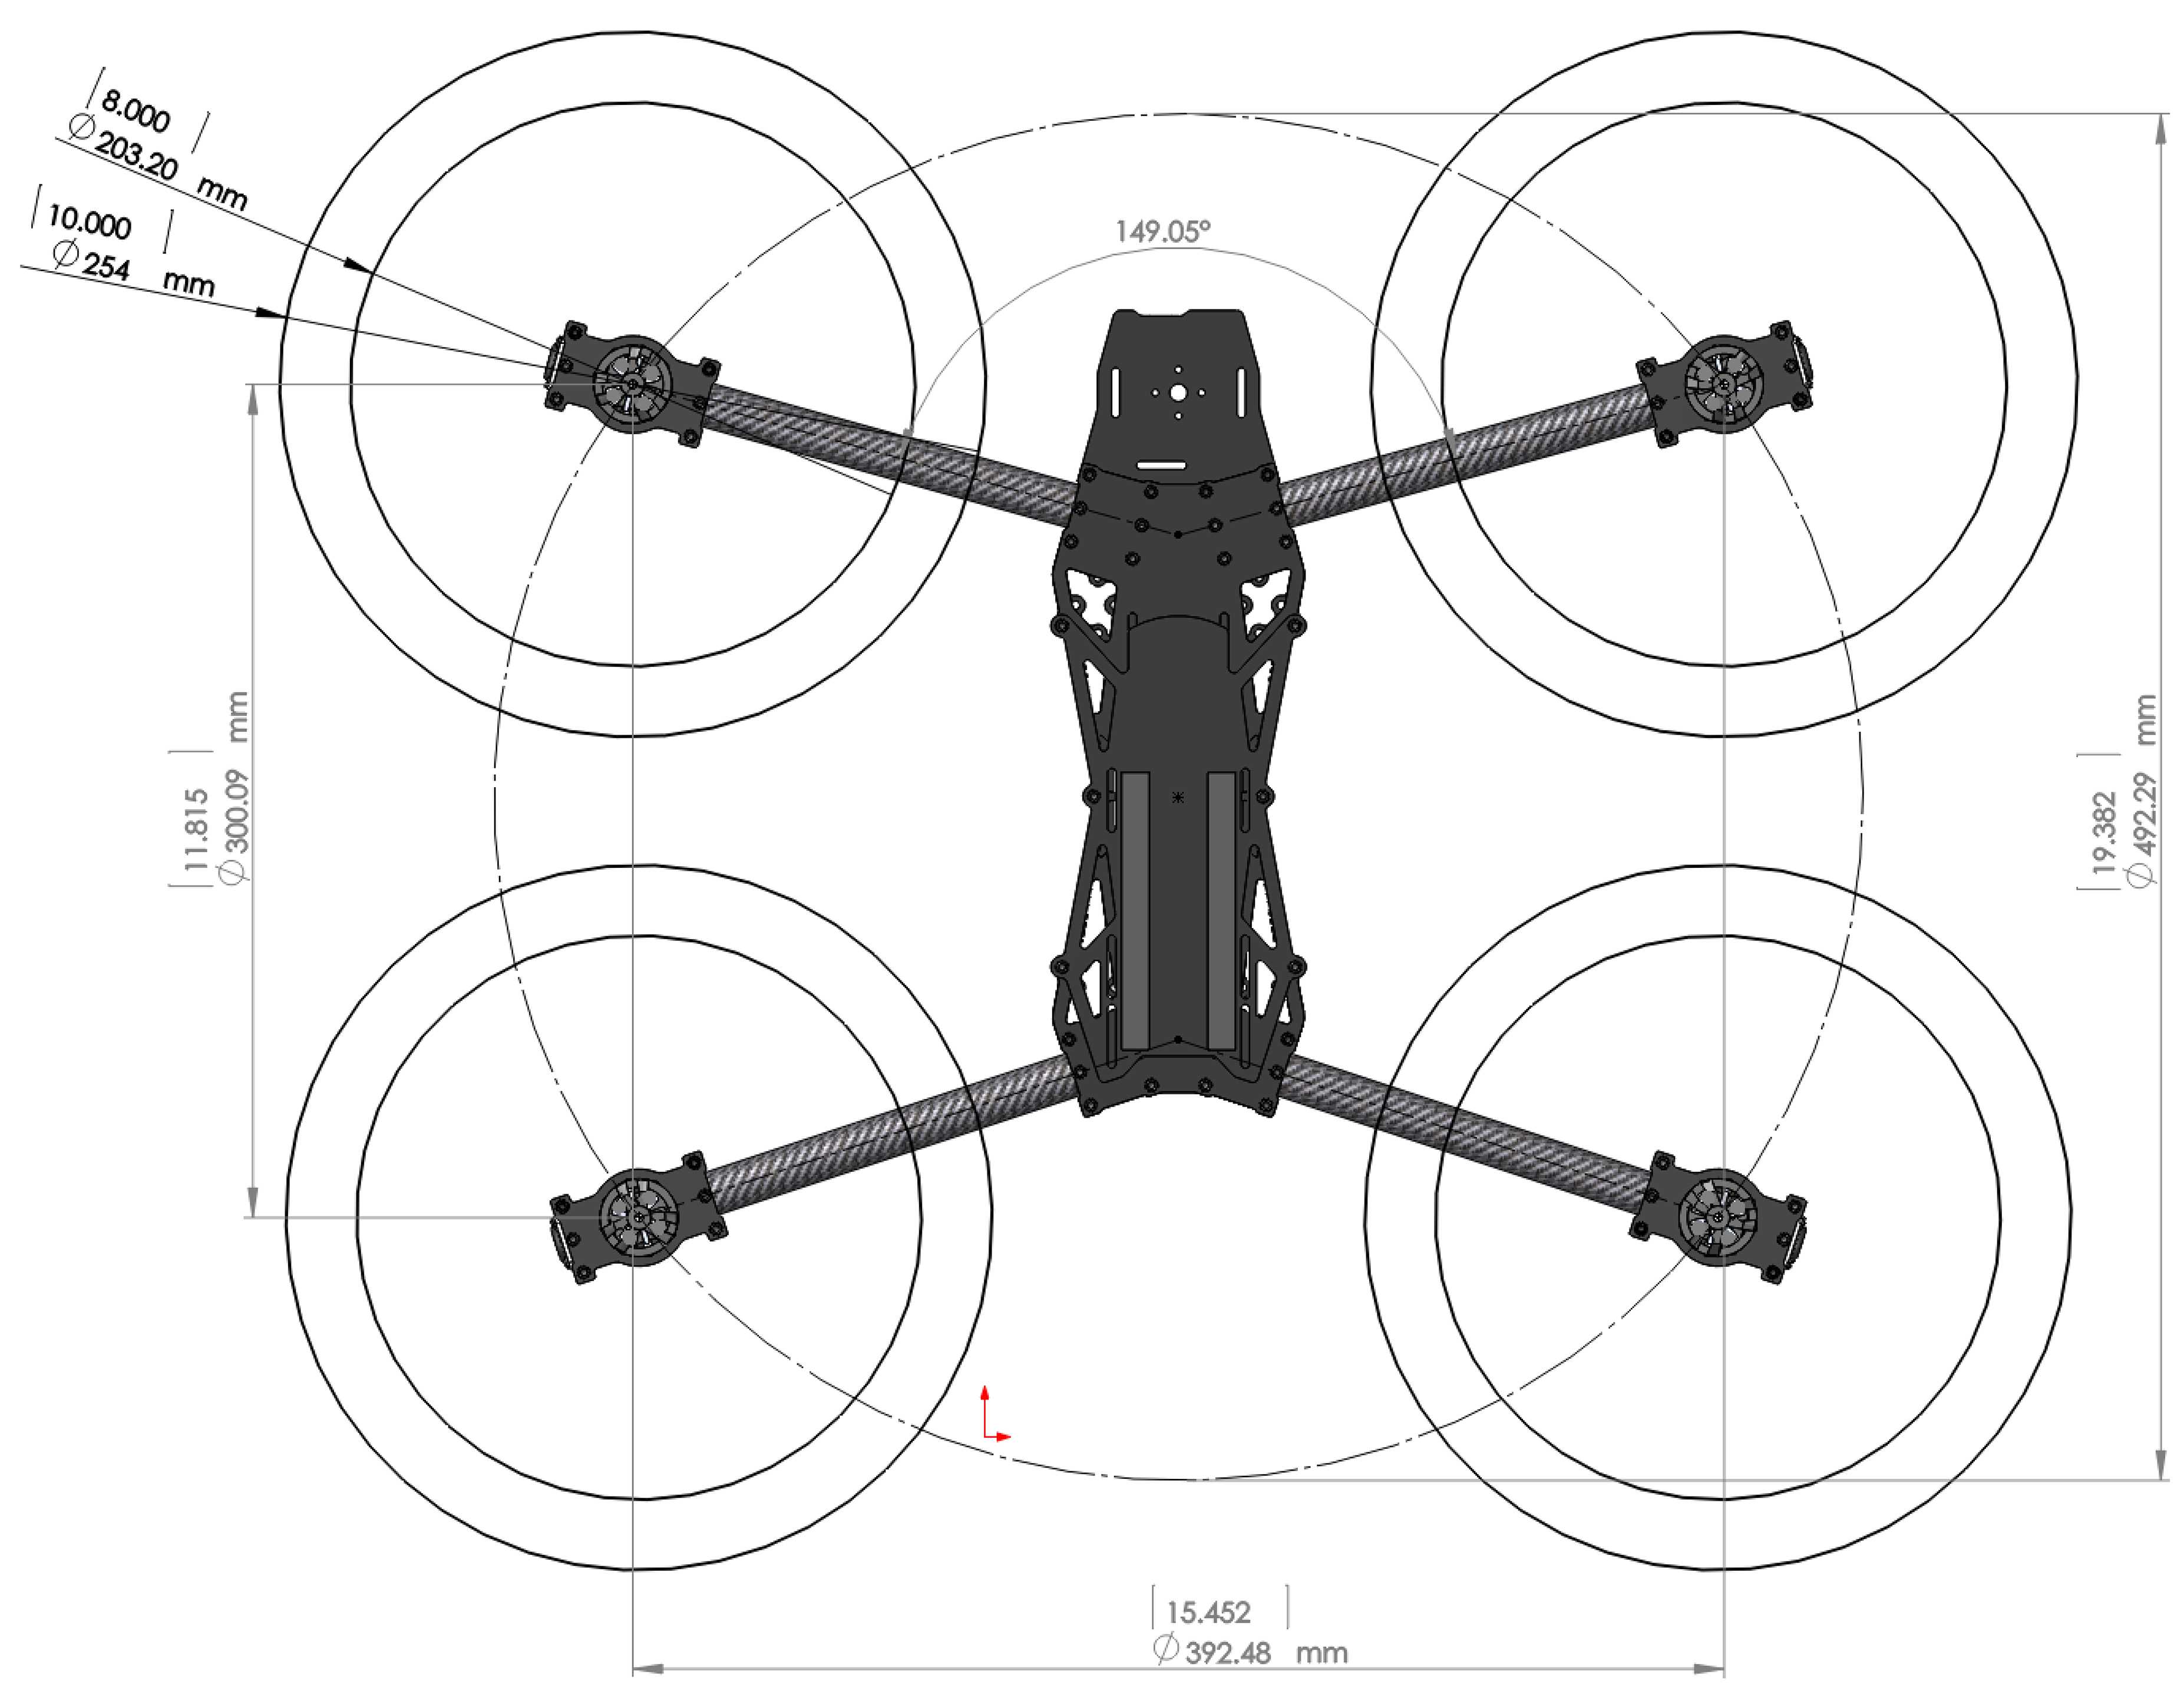 Lynxmotion HQuad500 Drohne (Basis-Kombi-Kit)